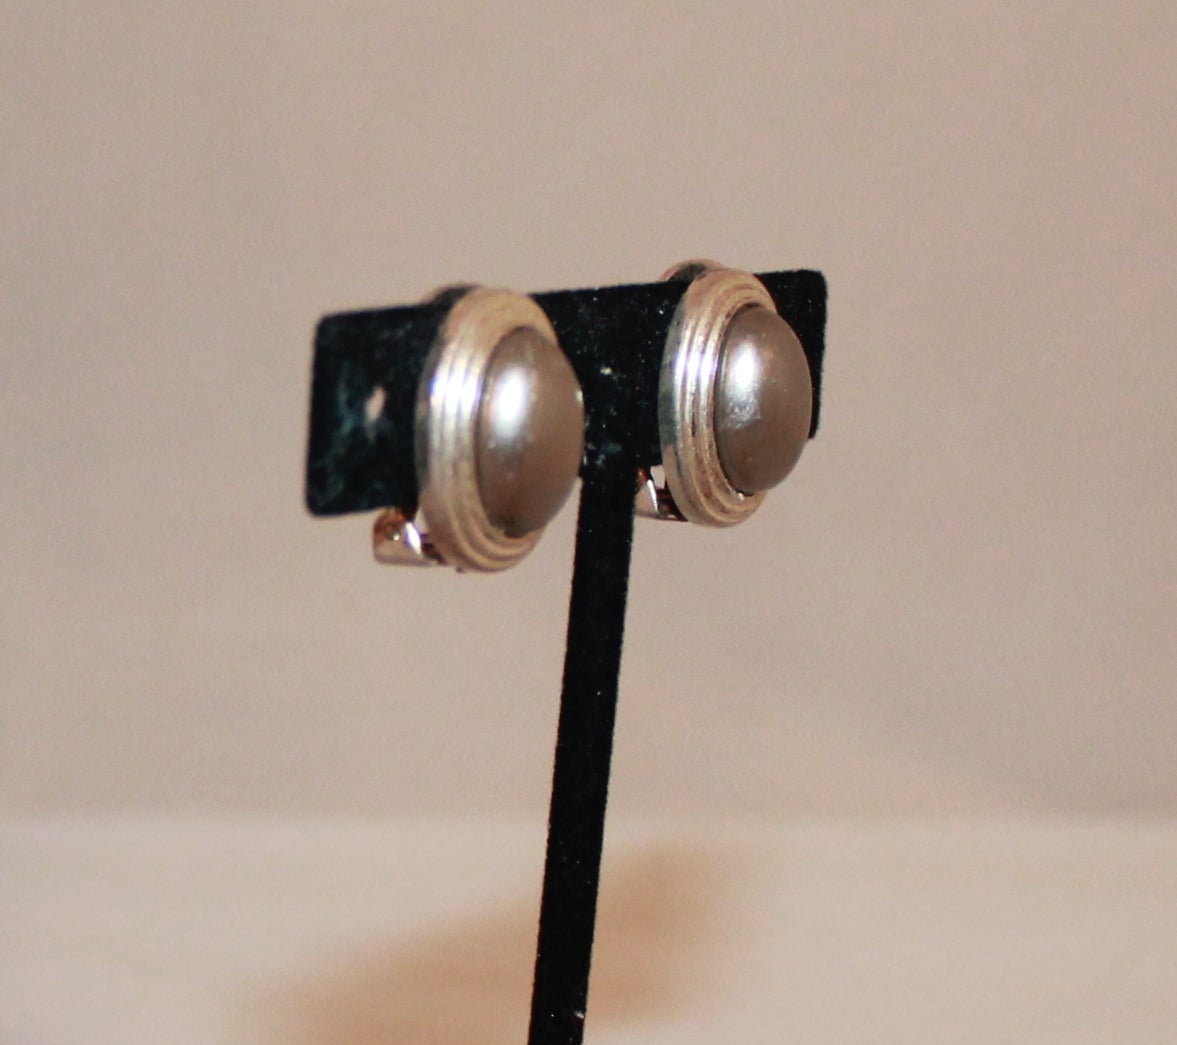 christian dior pearl clip on earrings